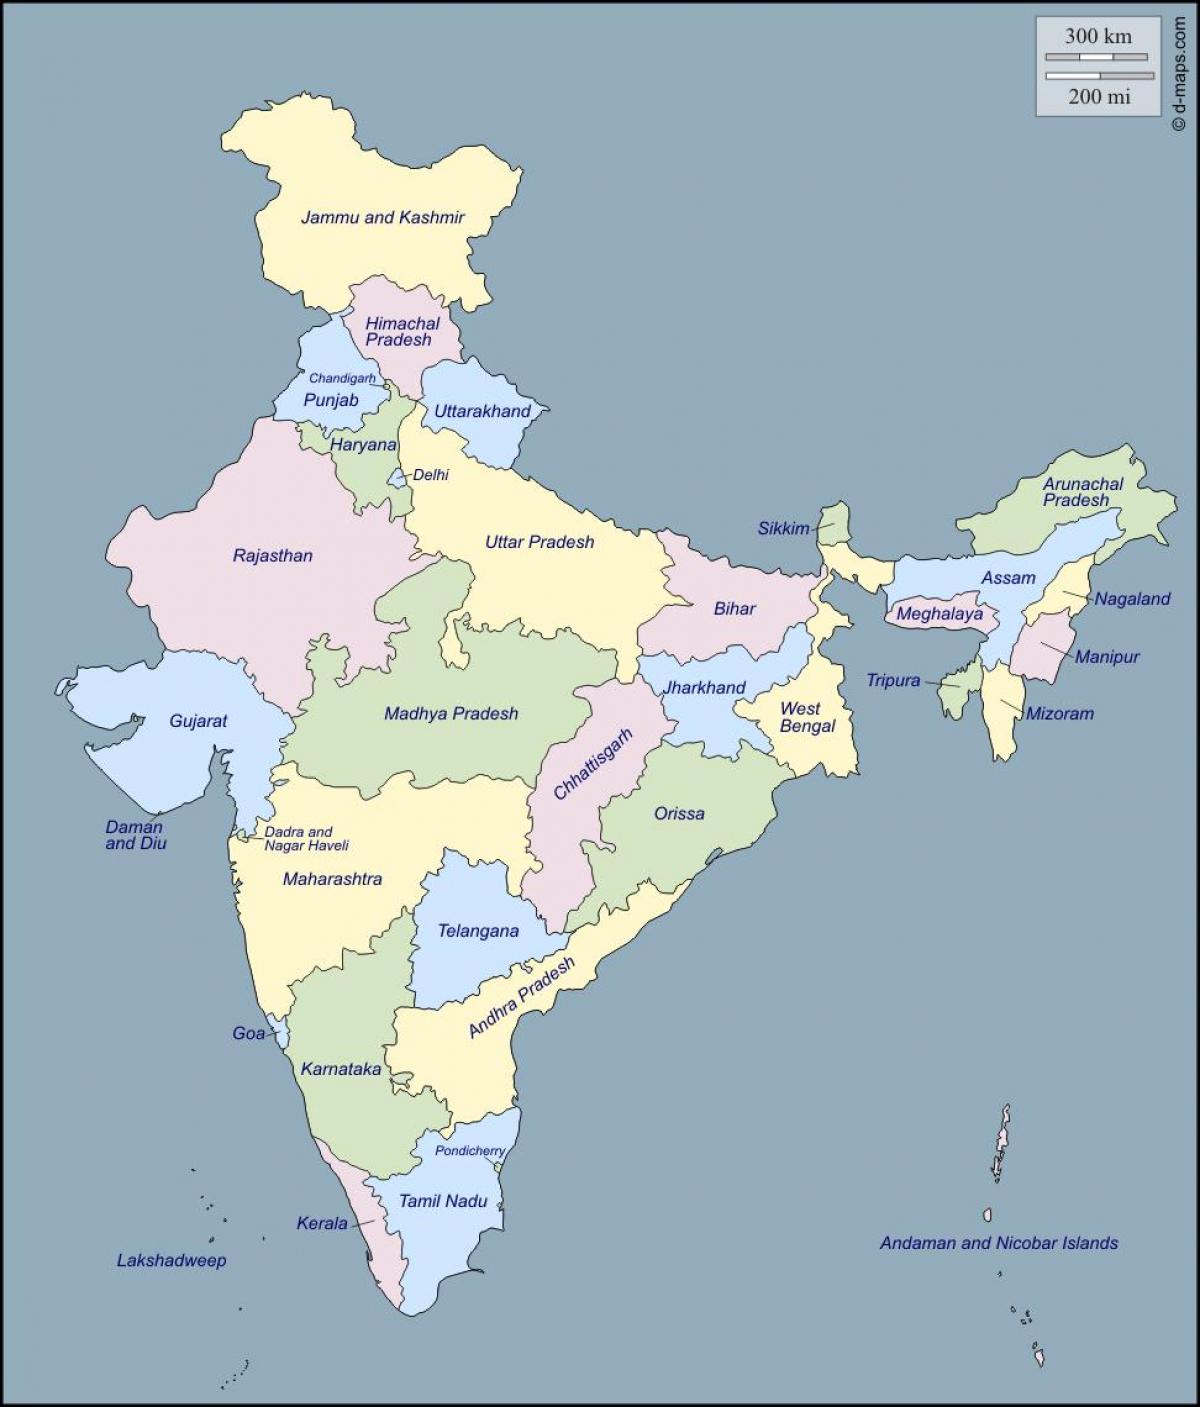 Carte de l'inde avec des noms d'états